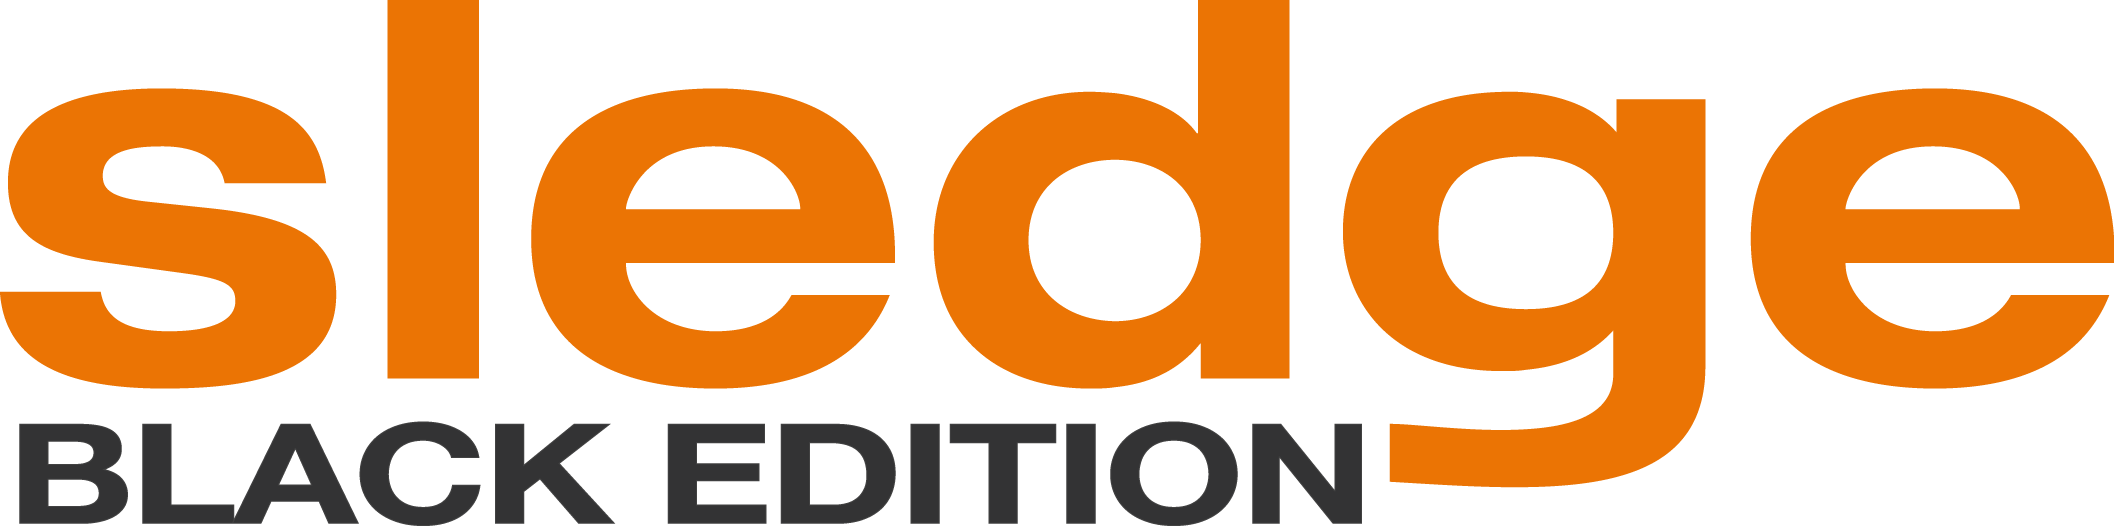 Studiologic Sledge Black Edition logo